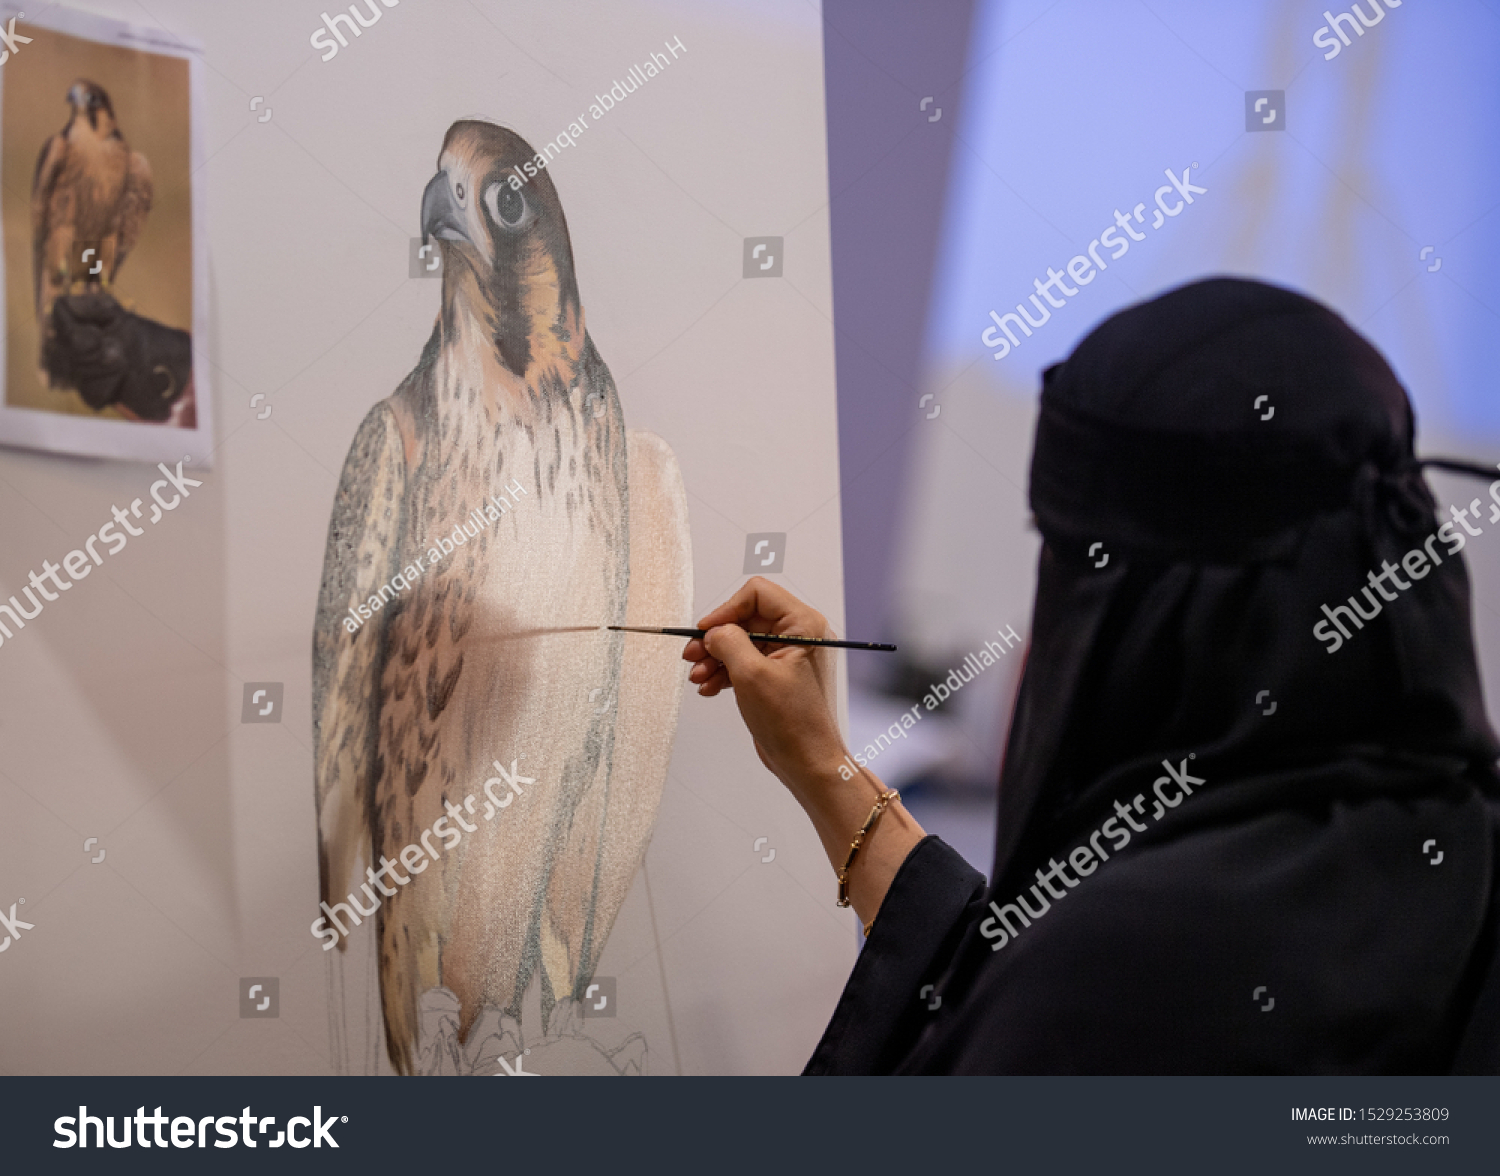 Saudi Falcons and Hunting Exhibition in Riyadh Season 11 Oct 2019 Saudi arabia  #1529253809